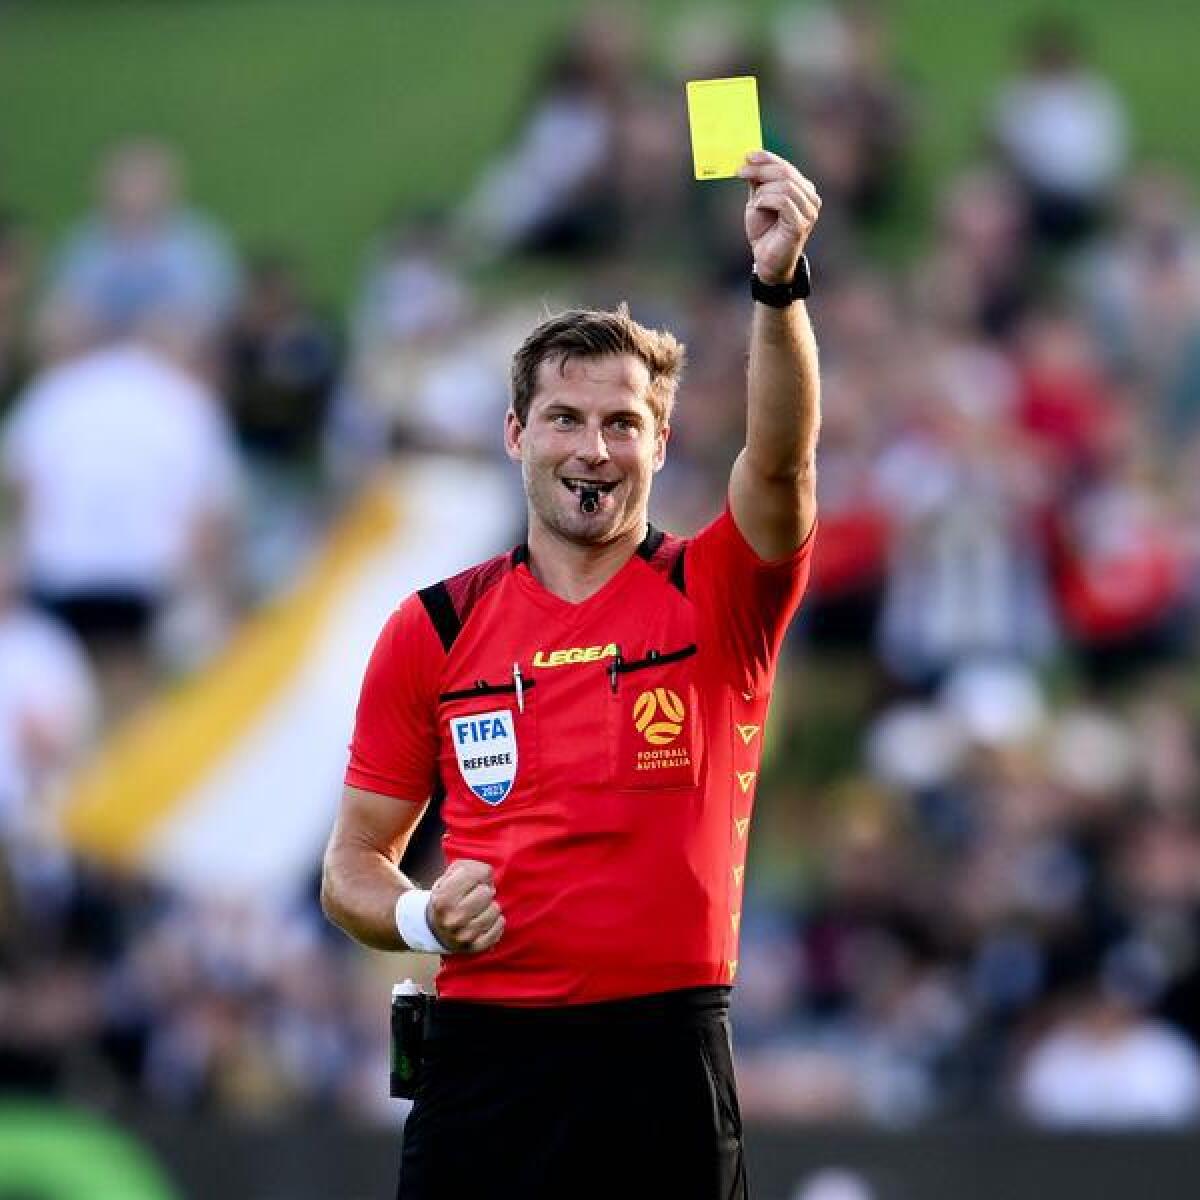 A file photo of a referee 